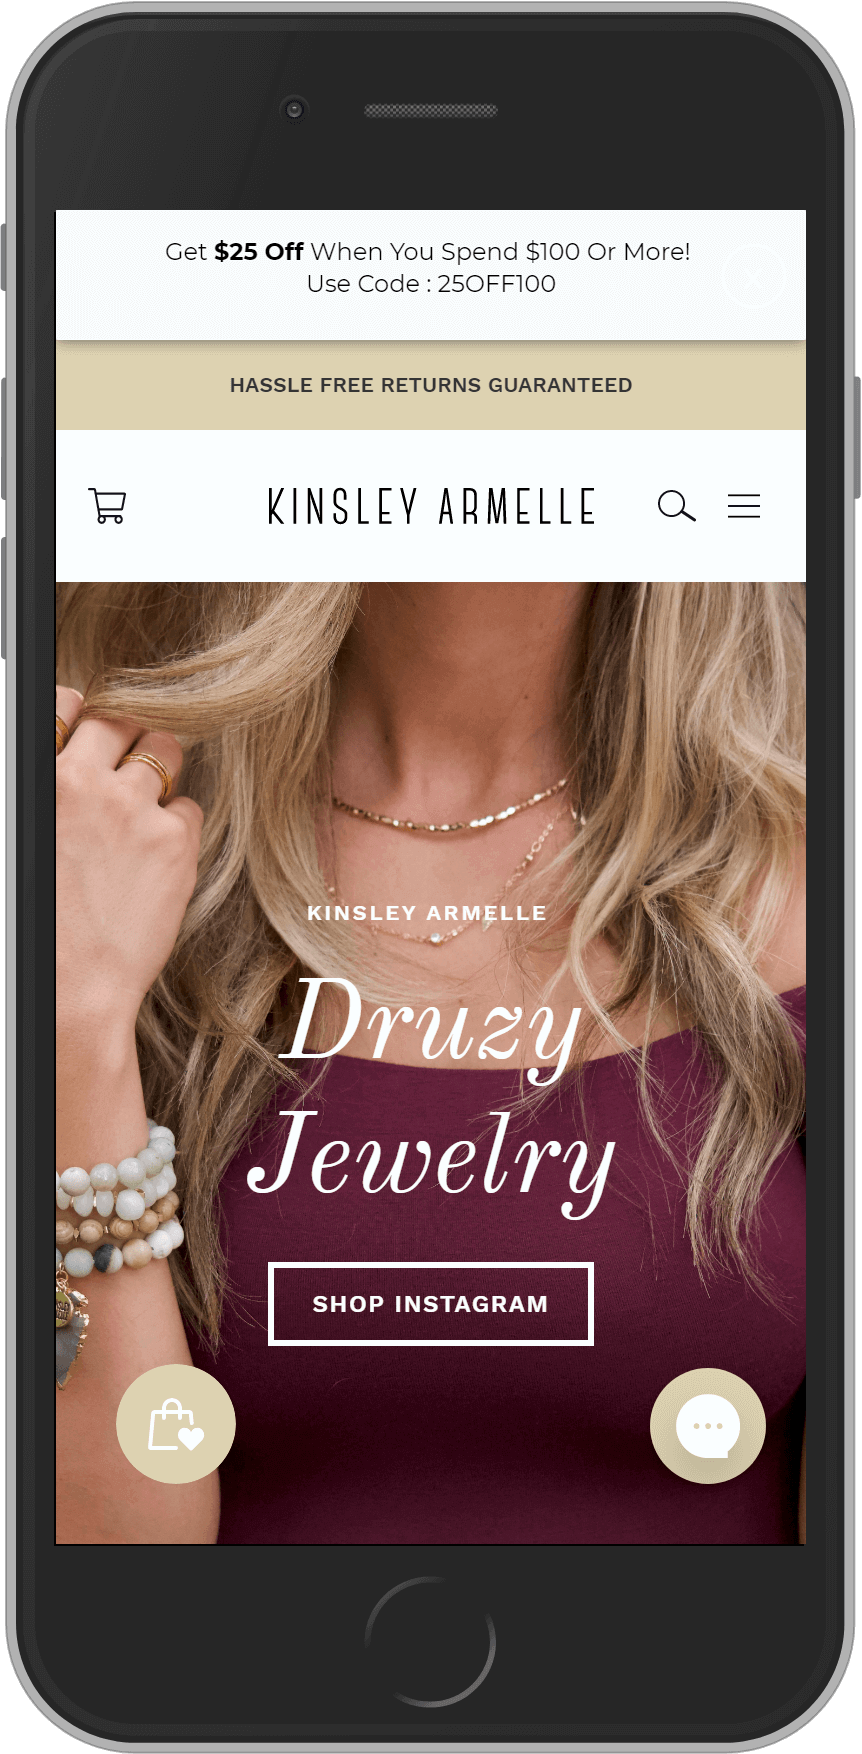 Kinsley Armelle on mobile